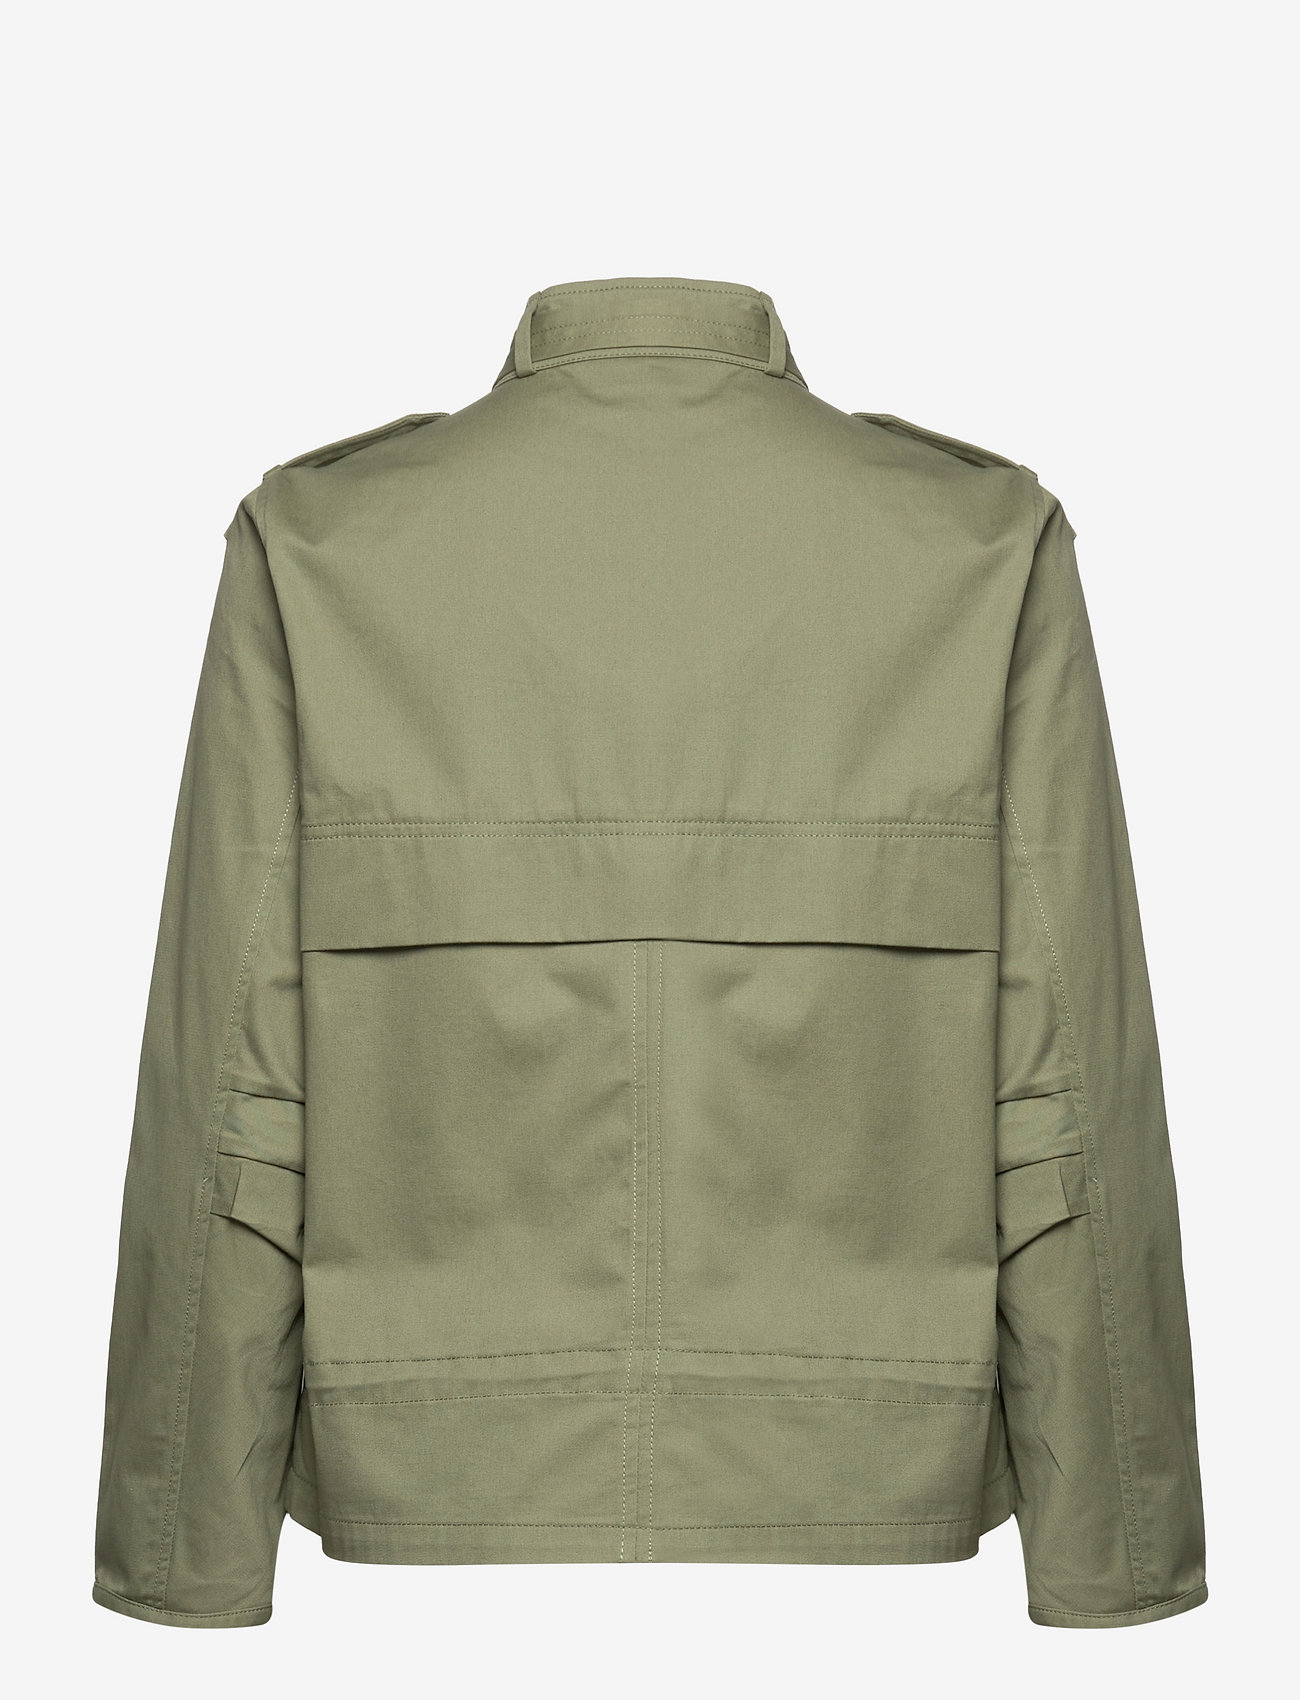 Esprit Casual - Outdoor jacket - utility-jacken - light khaki - 1